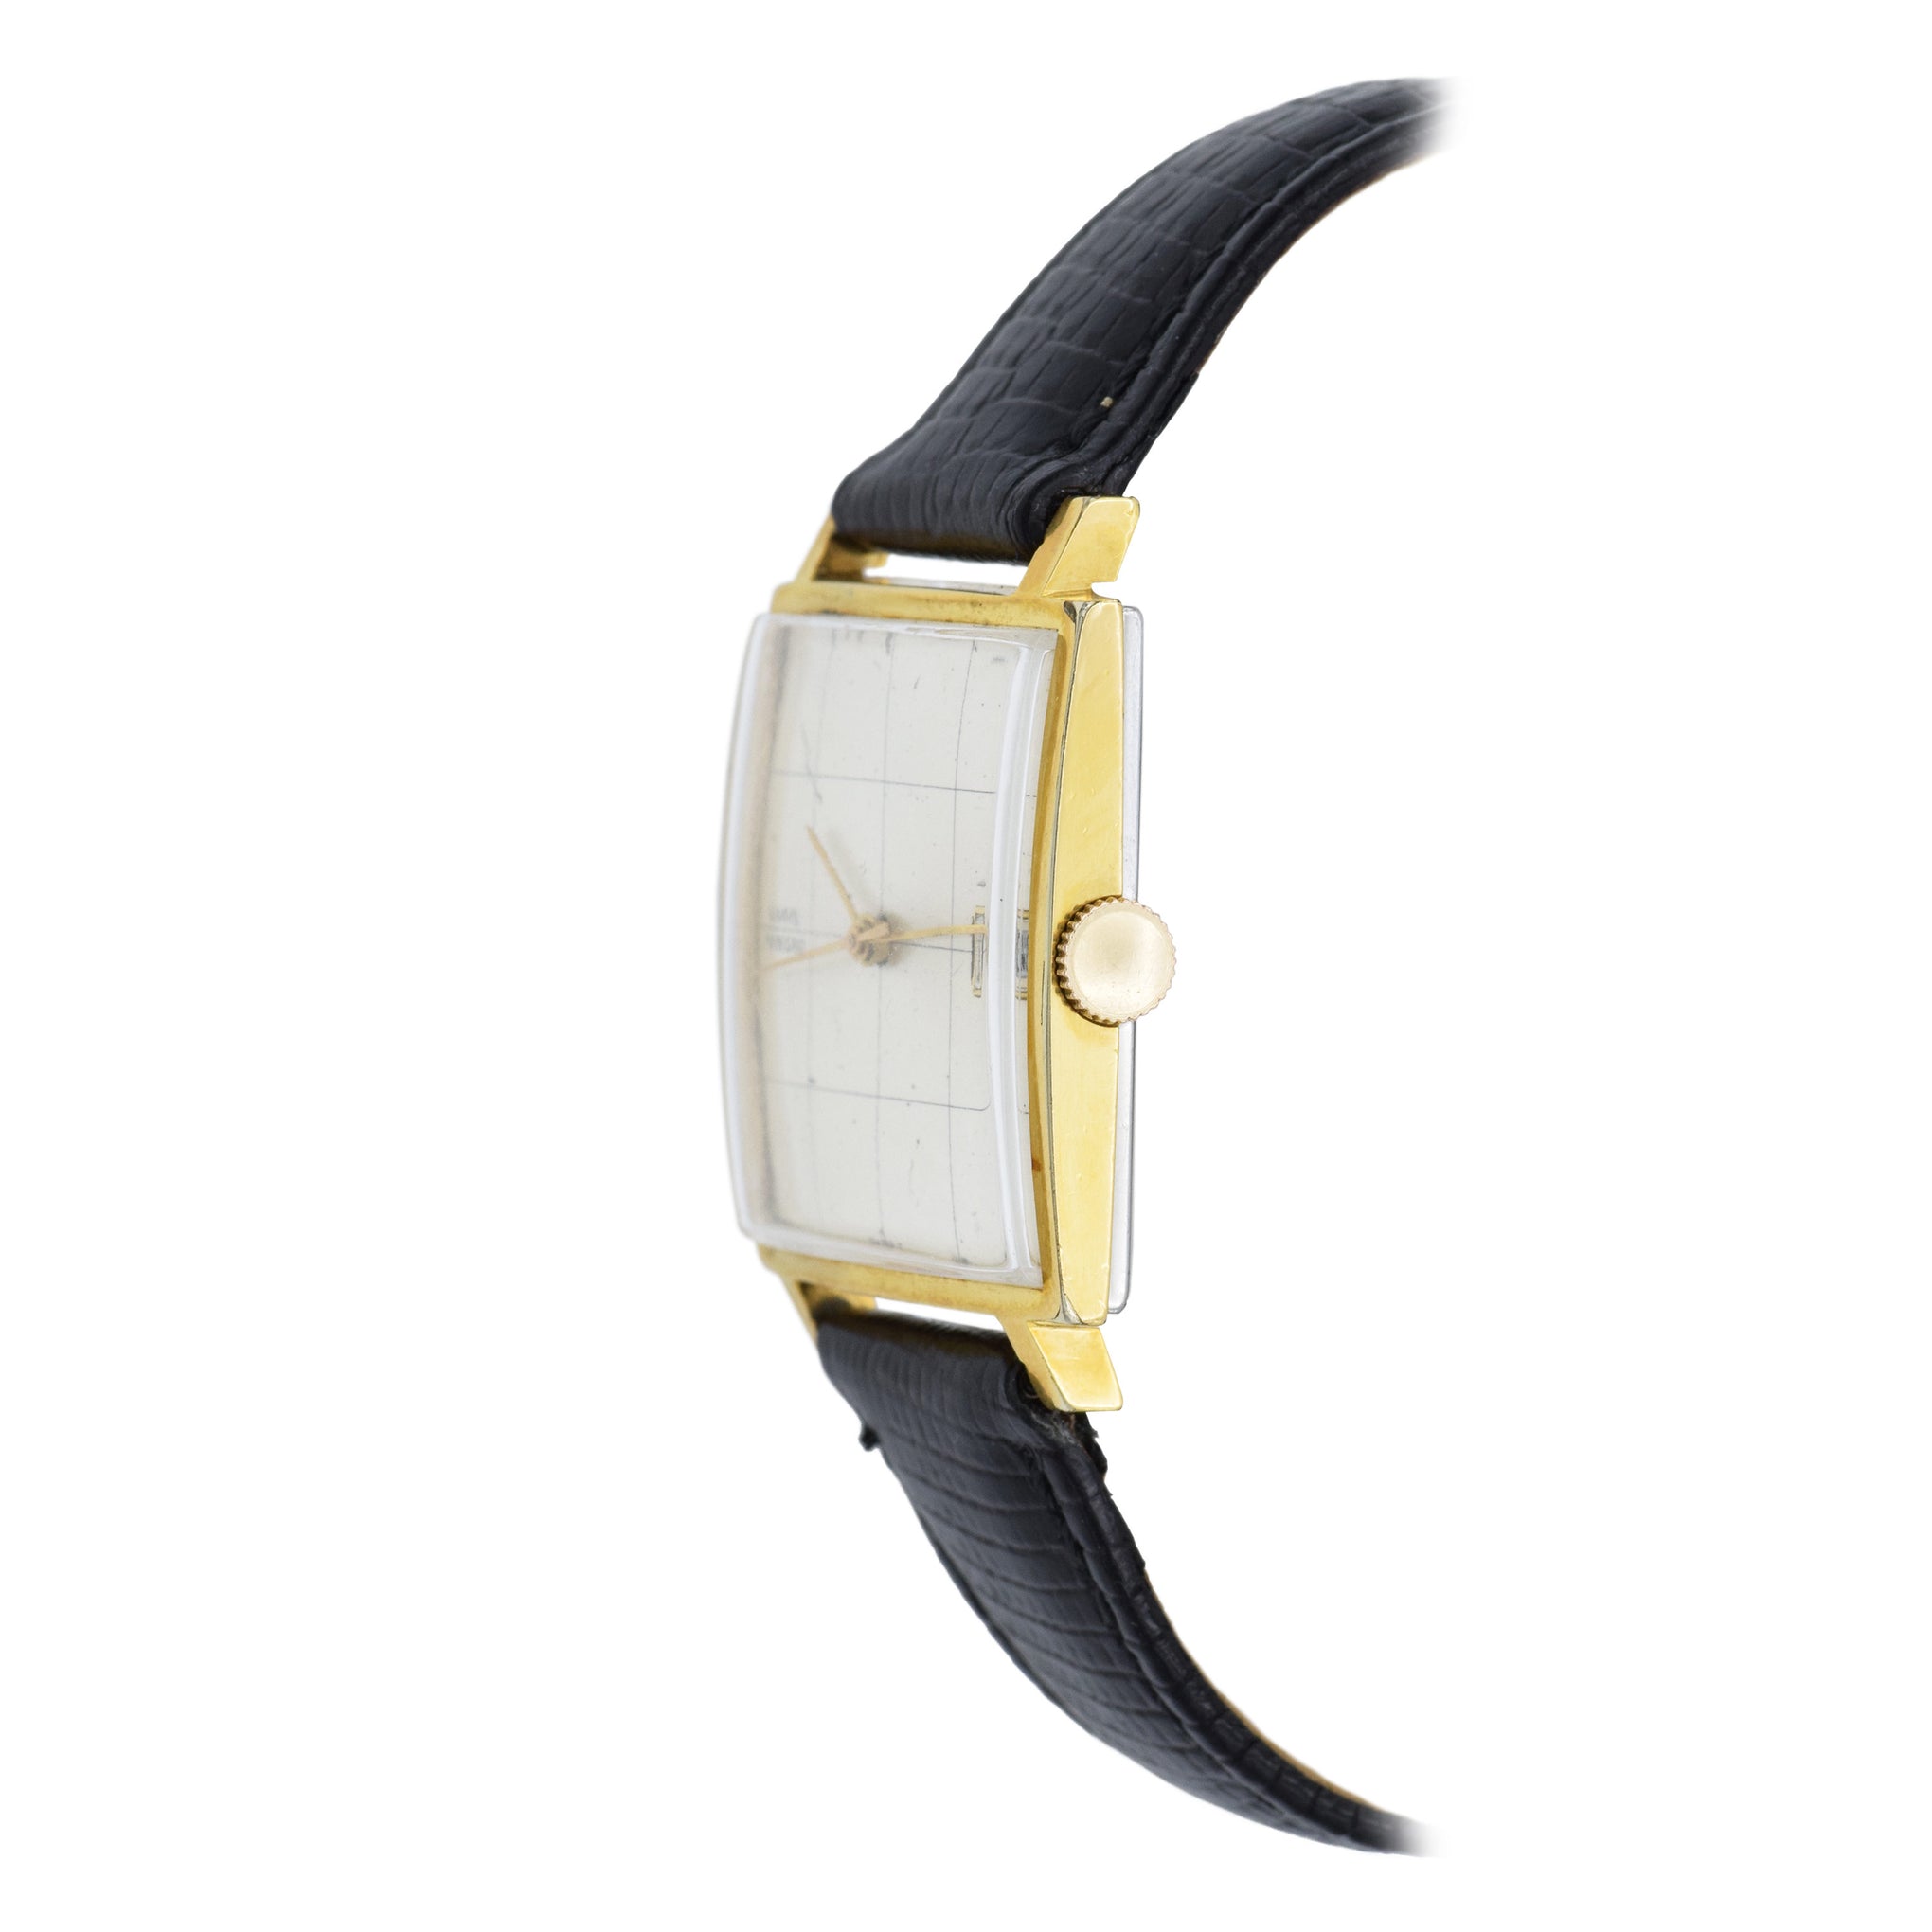 Vintage 1960s Girard-Perregaux Watch